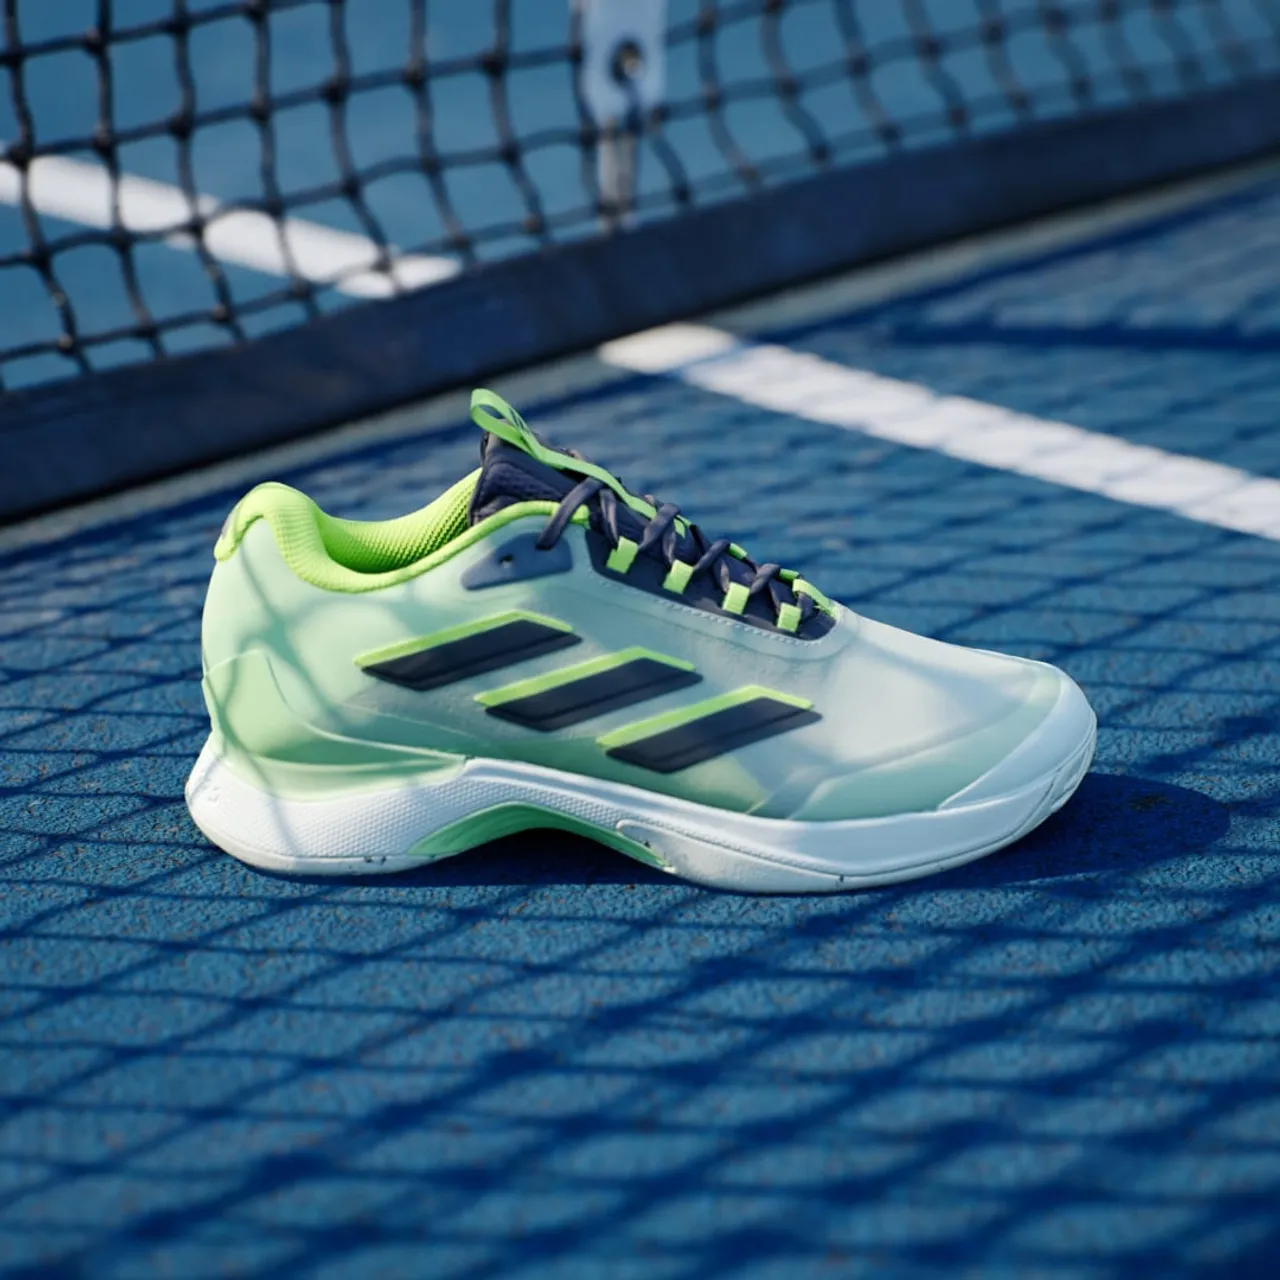 Avacourt 2 Tennis Shoes